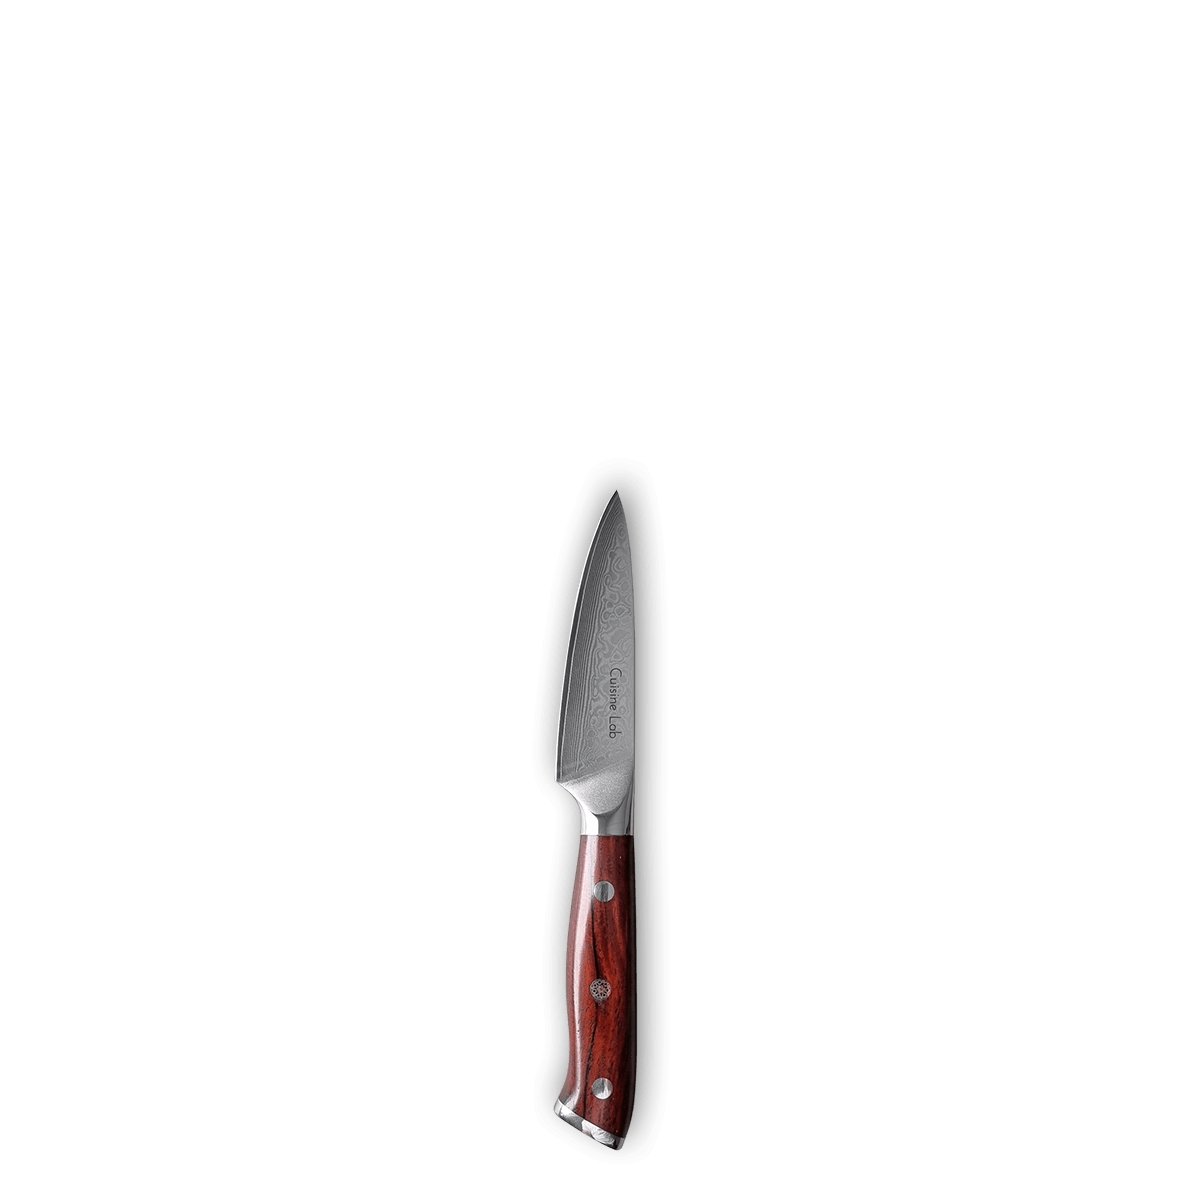 North Urtekniv 90 mm. - Kitchen Knives - cuisinelab